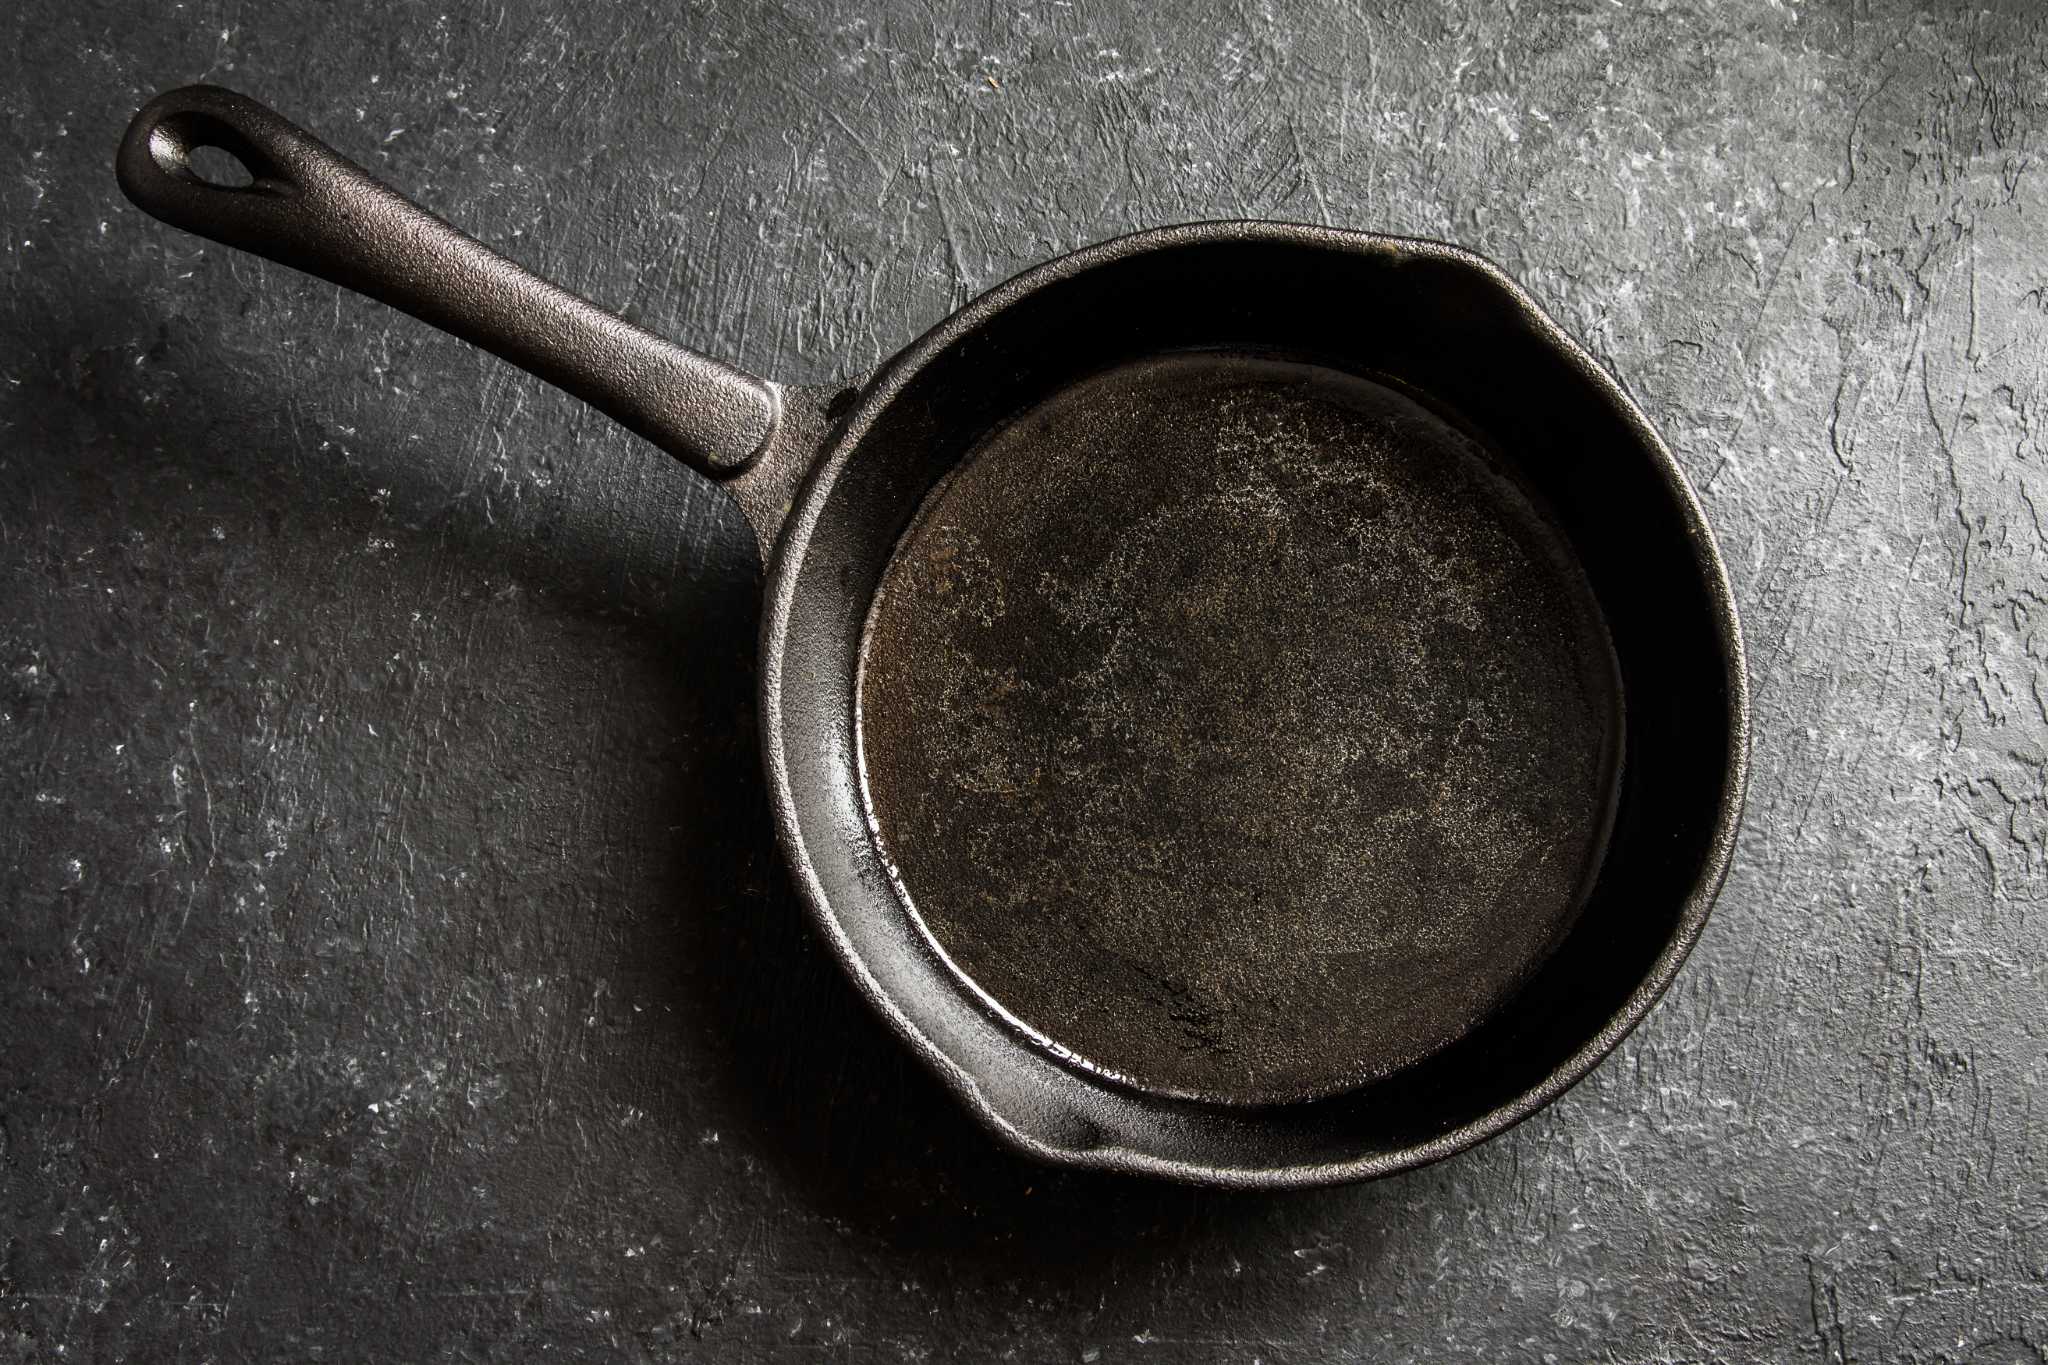 How to Flatten a Warped Frying Pan